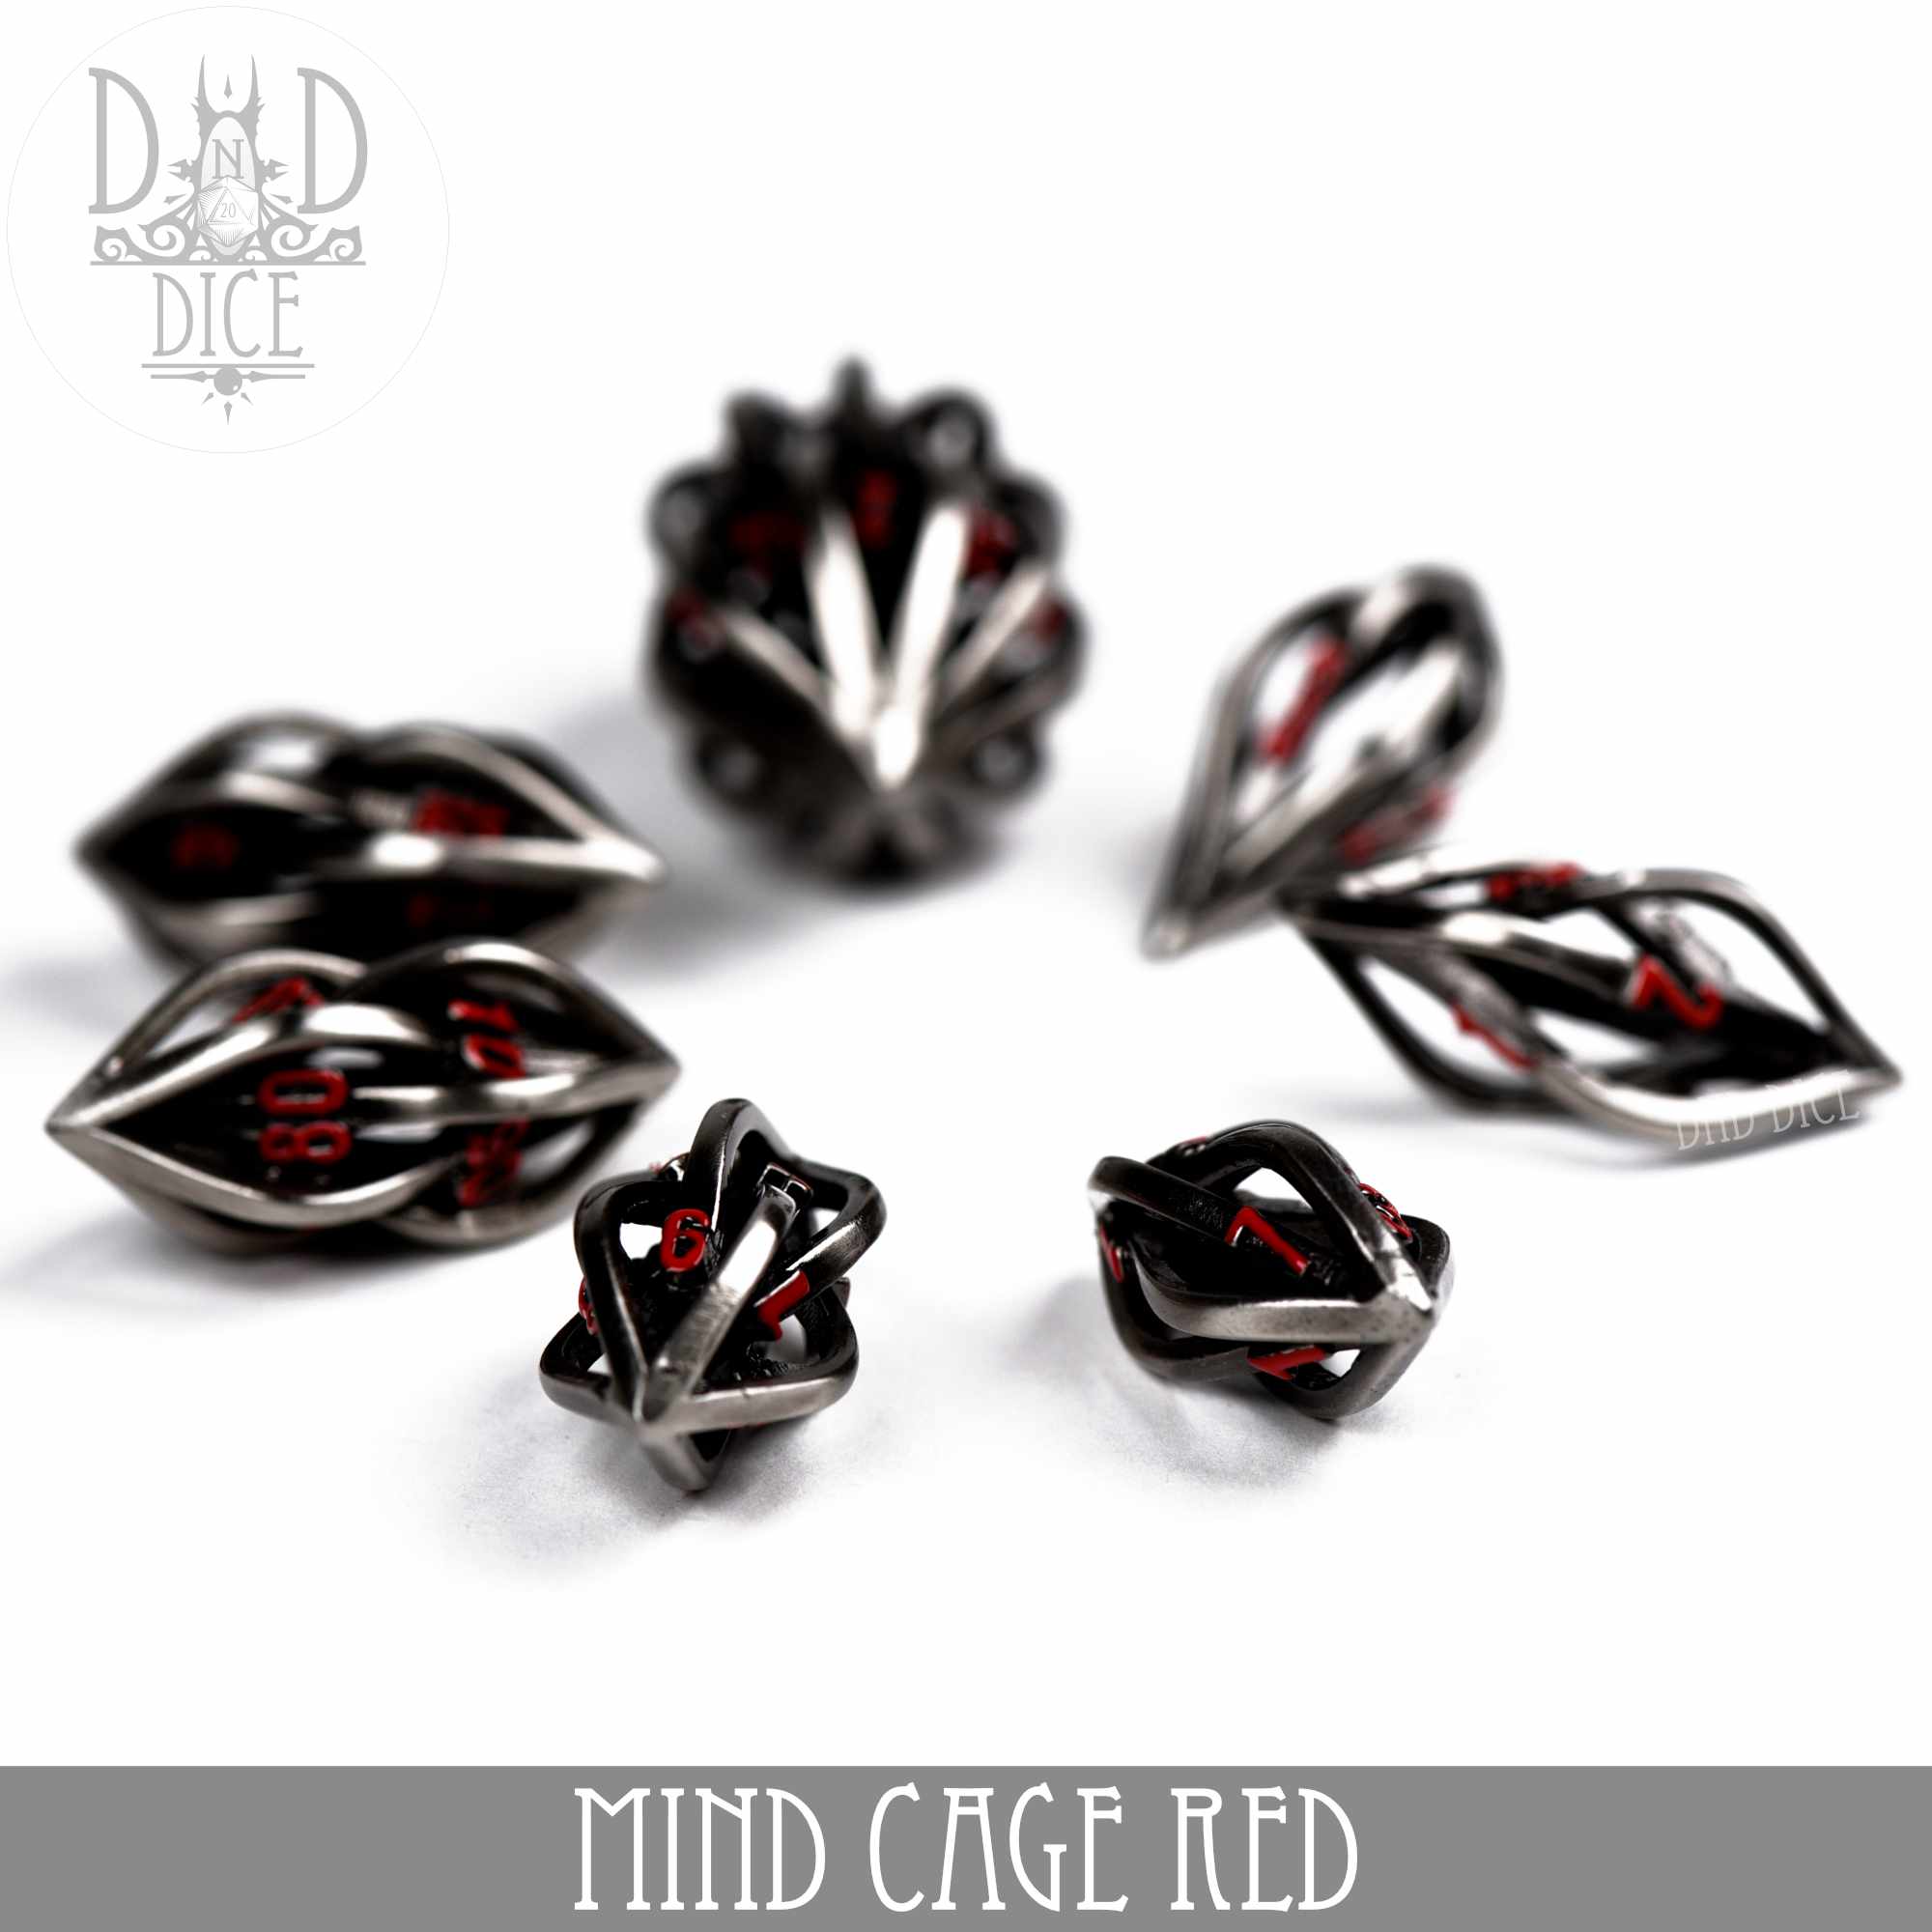 Mind Cage Red - Metal Dice Set (Gift Box)